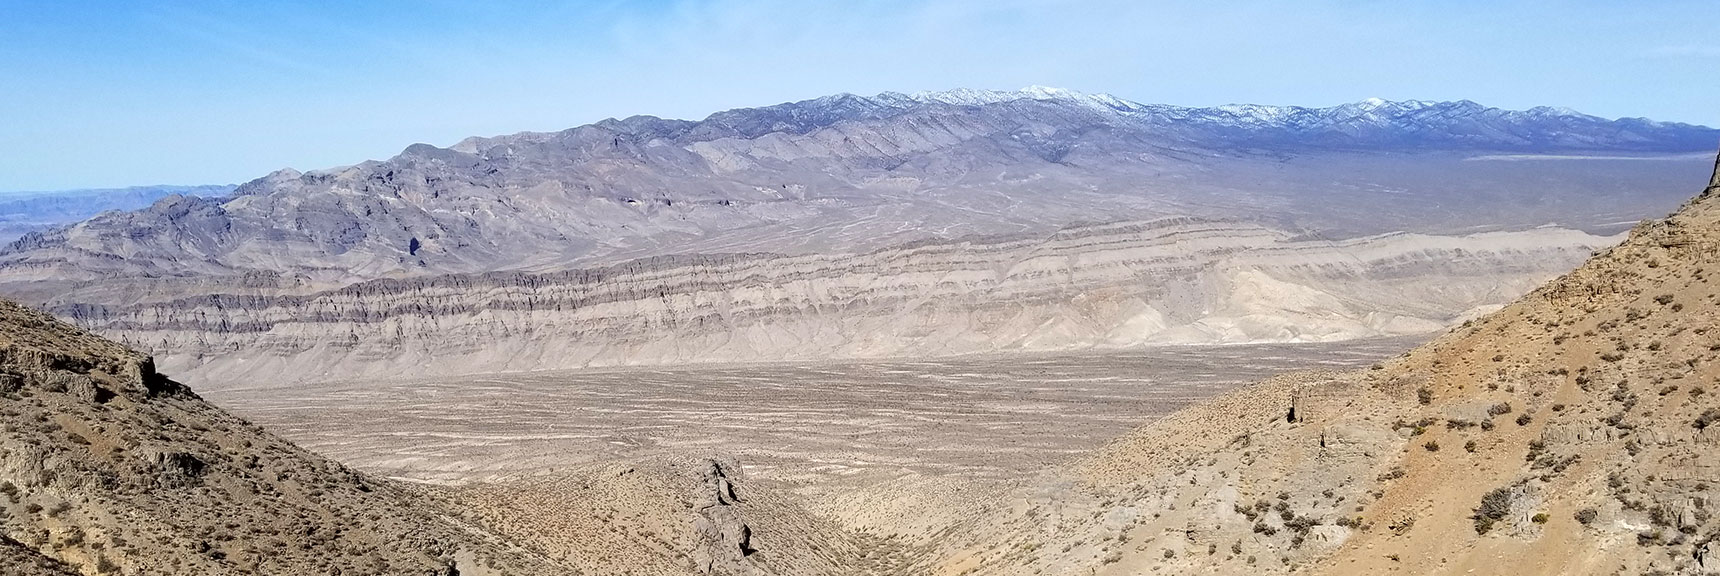 Sheep Range Looking Down North Trail Canyon on Gass Peak, Nevada